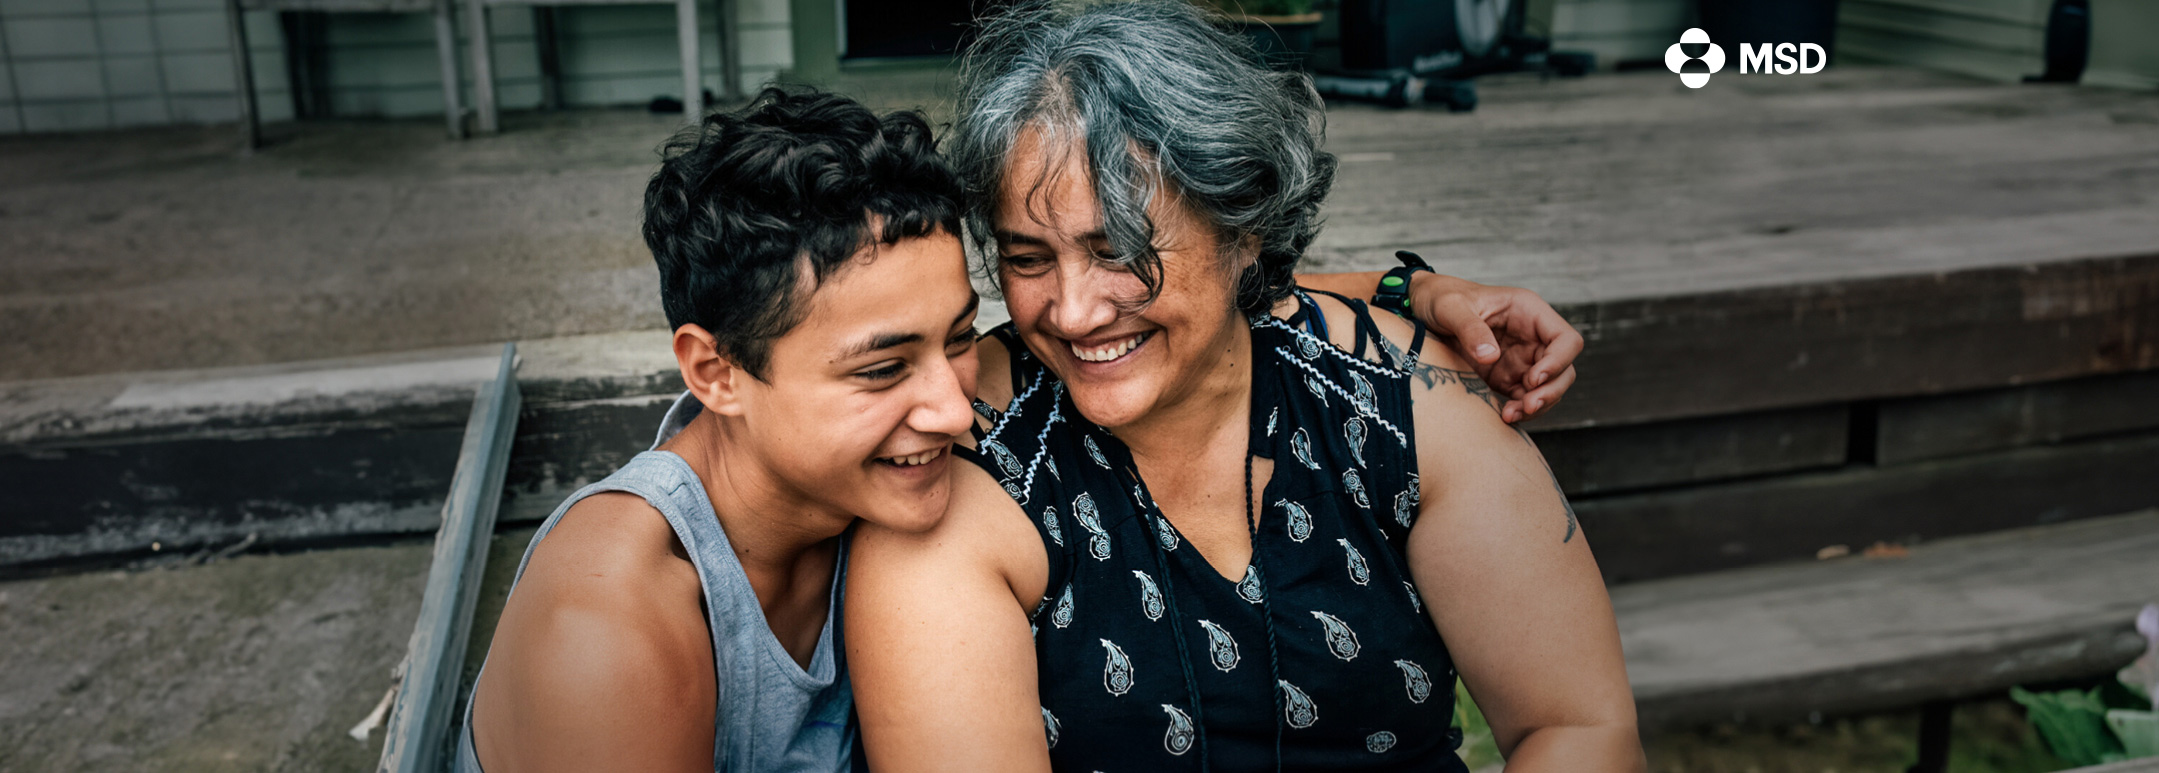 A teenage boy enjoys a laugh with his grandma.